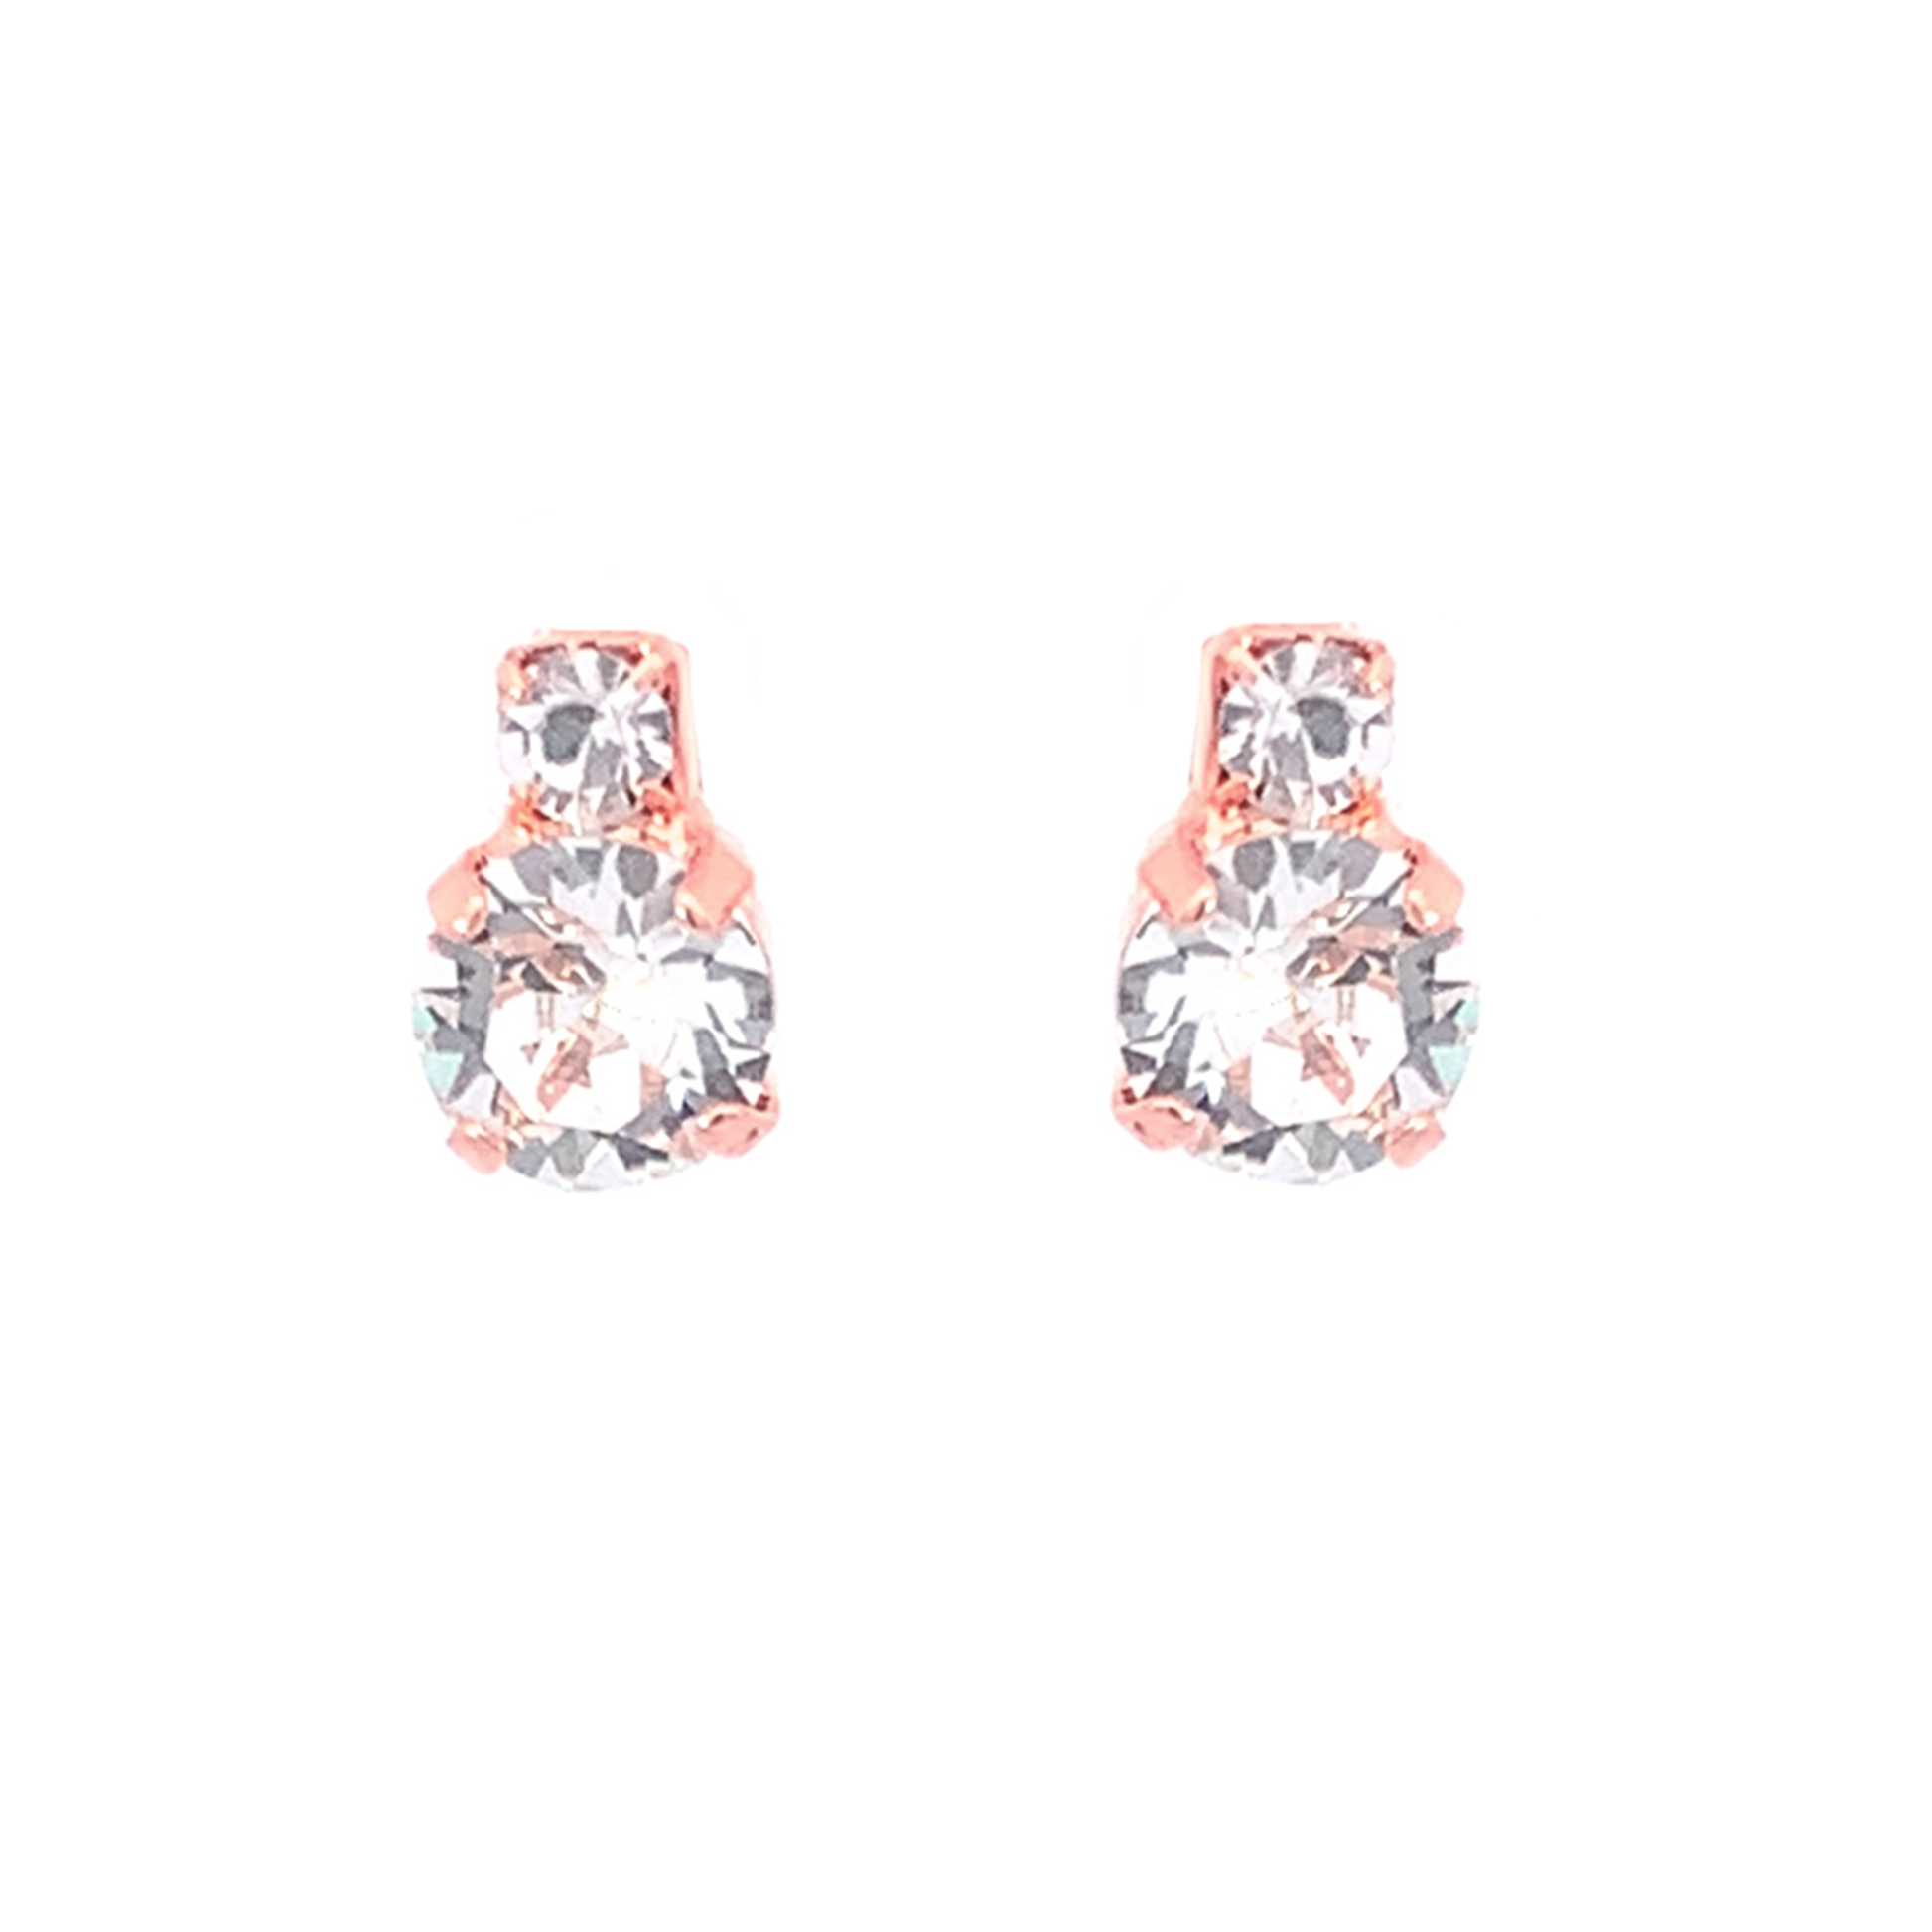 Diamond solitaire stud earrings rose gold